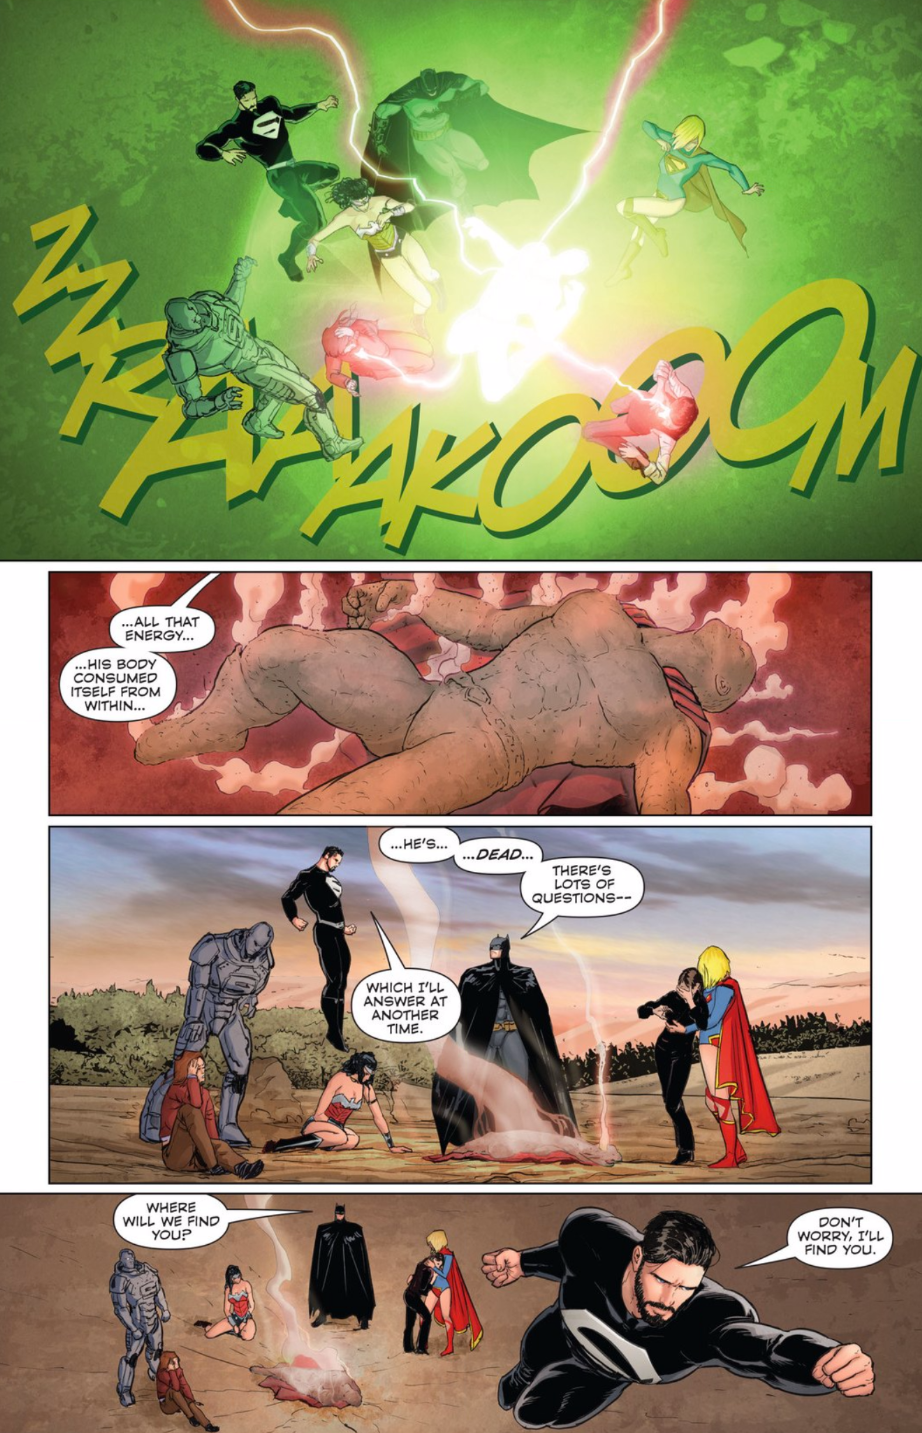 18 - [DC Comics] Superman: Discusión General - Página 10 Pmxp5wkhym7m6rtysmbn